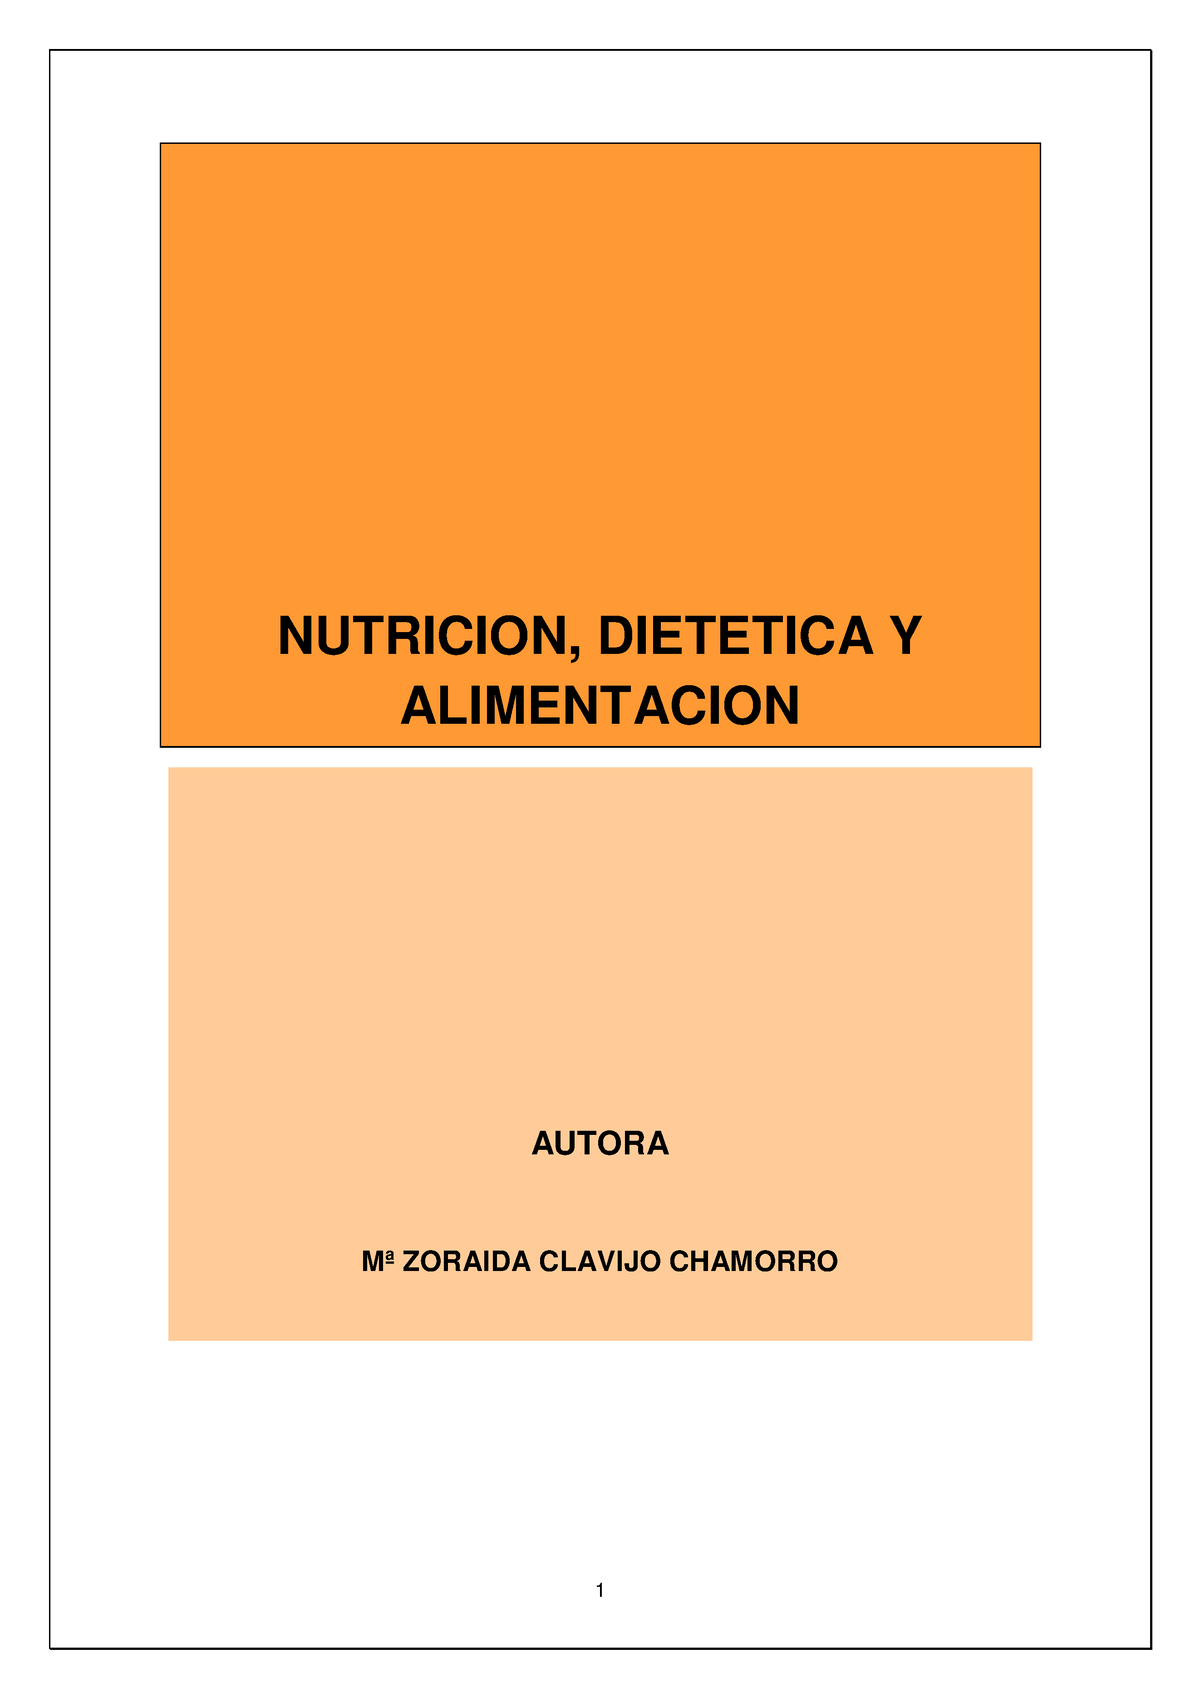 Dialnet Nutricion Dietetica Yalimentacion 697532 Nutricion Dietetica Y Alimentacion Autora Mª 1633